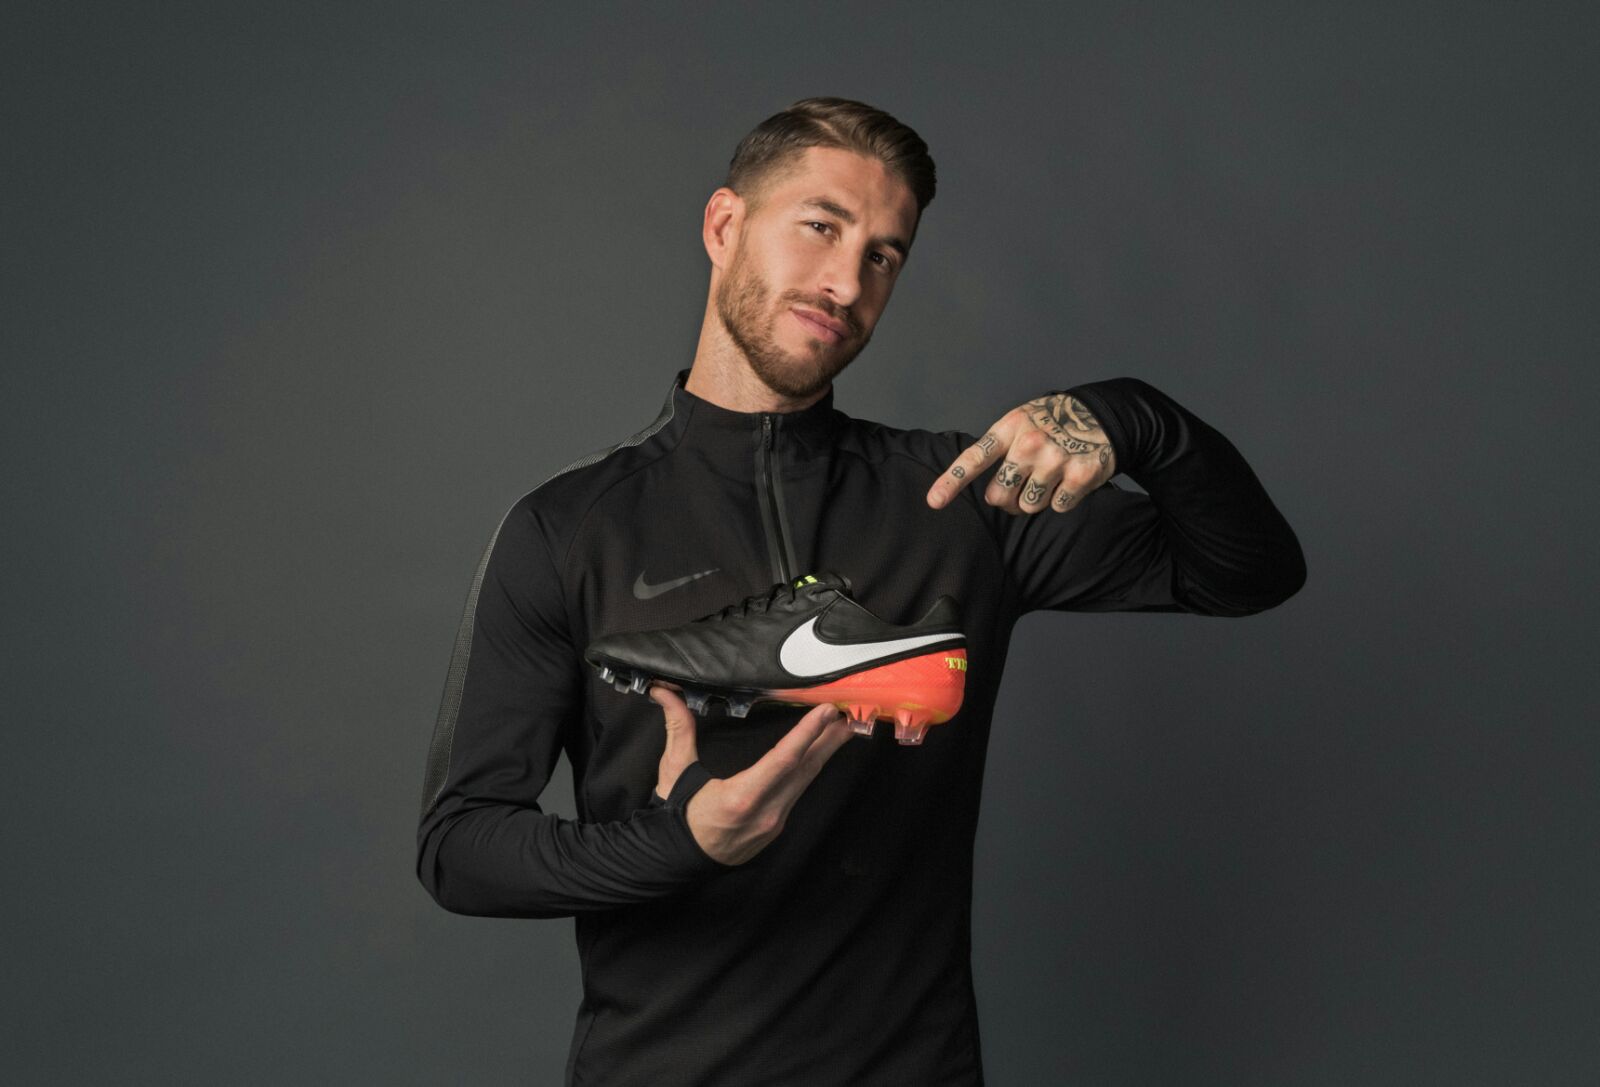 sarcoma novato Sospechar Sergio Ramos renueva finalmente con Nike hasta 2020 - Lenders Magazine